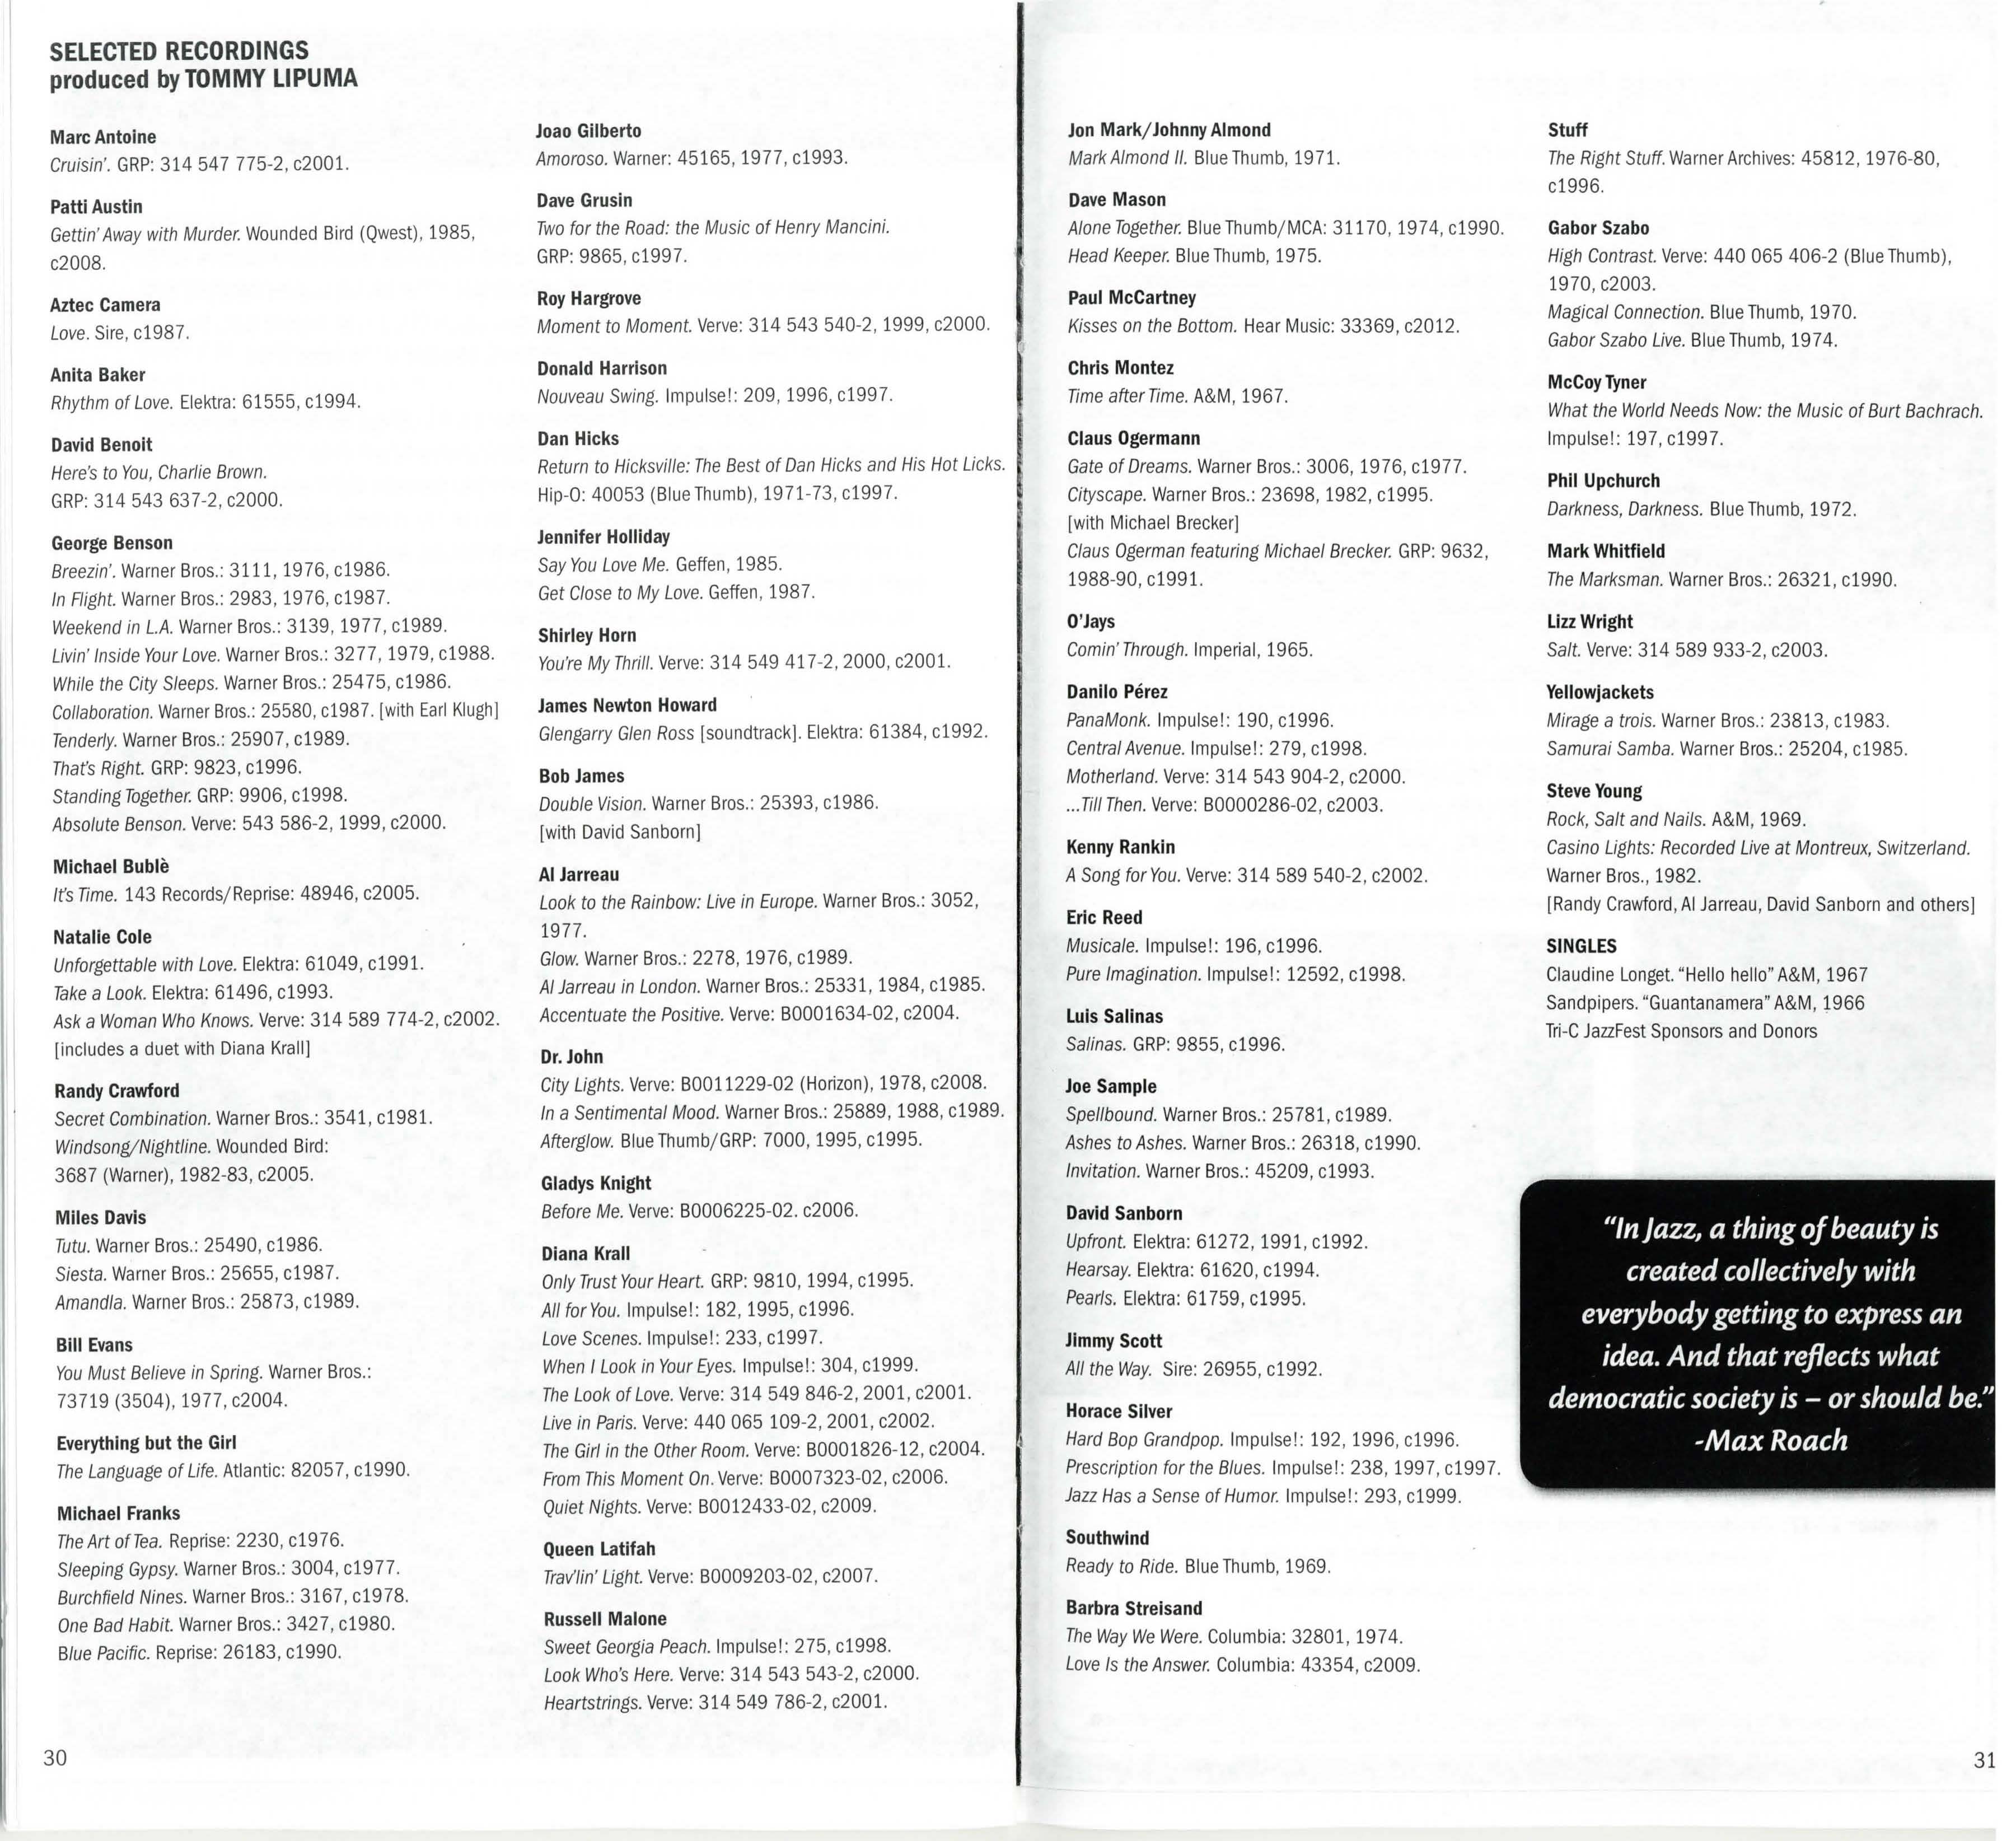 Program Page